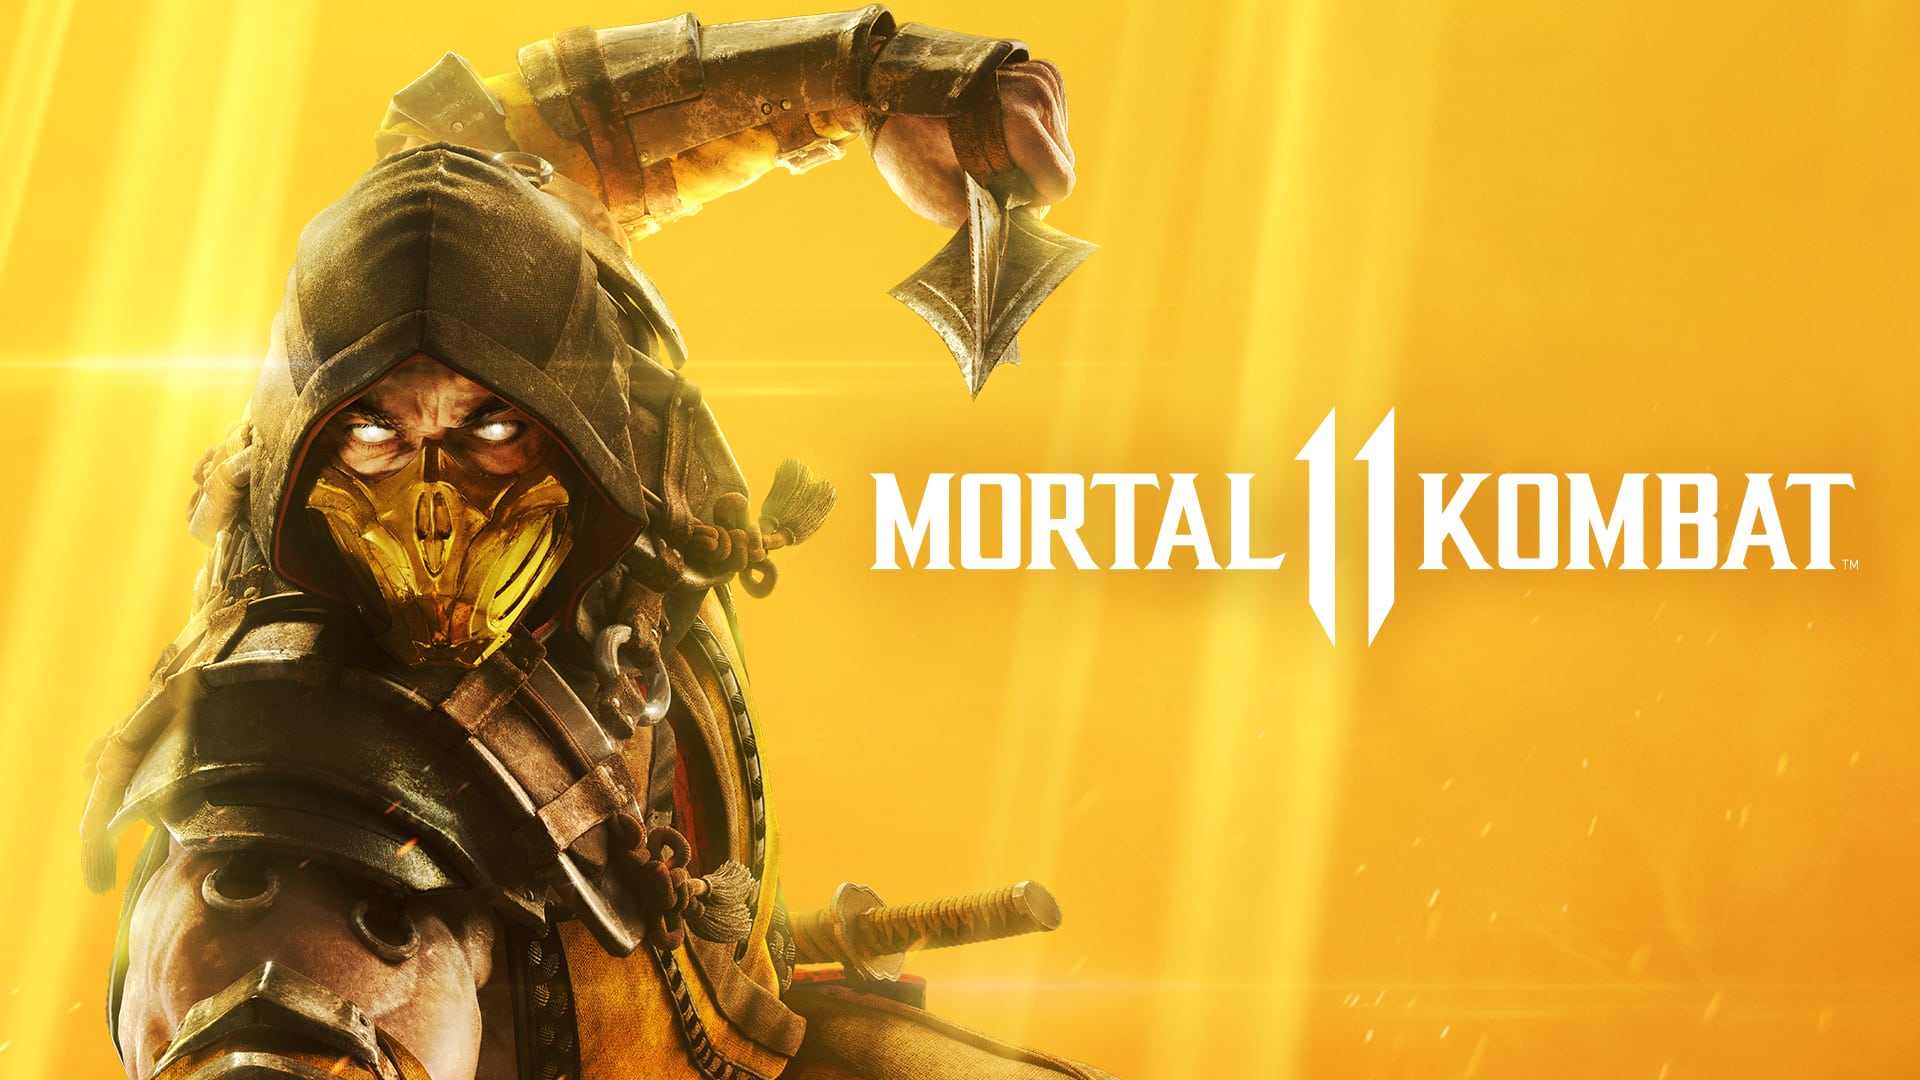 Mortal Kombat 11 sold over 12 million units worldwide